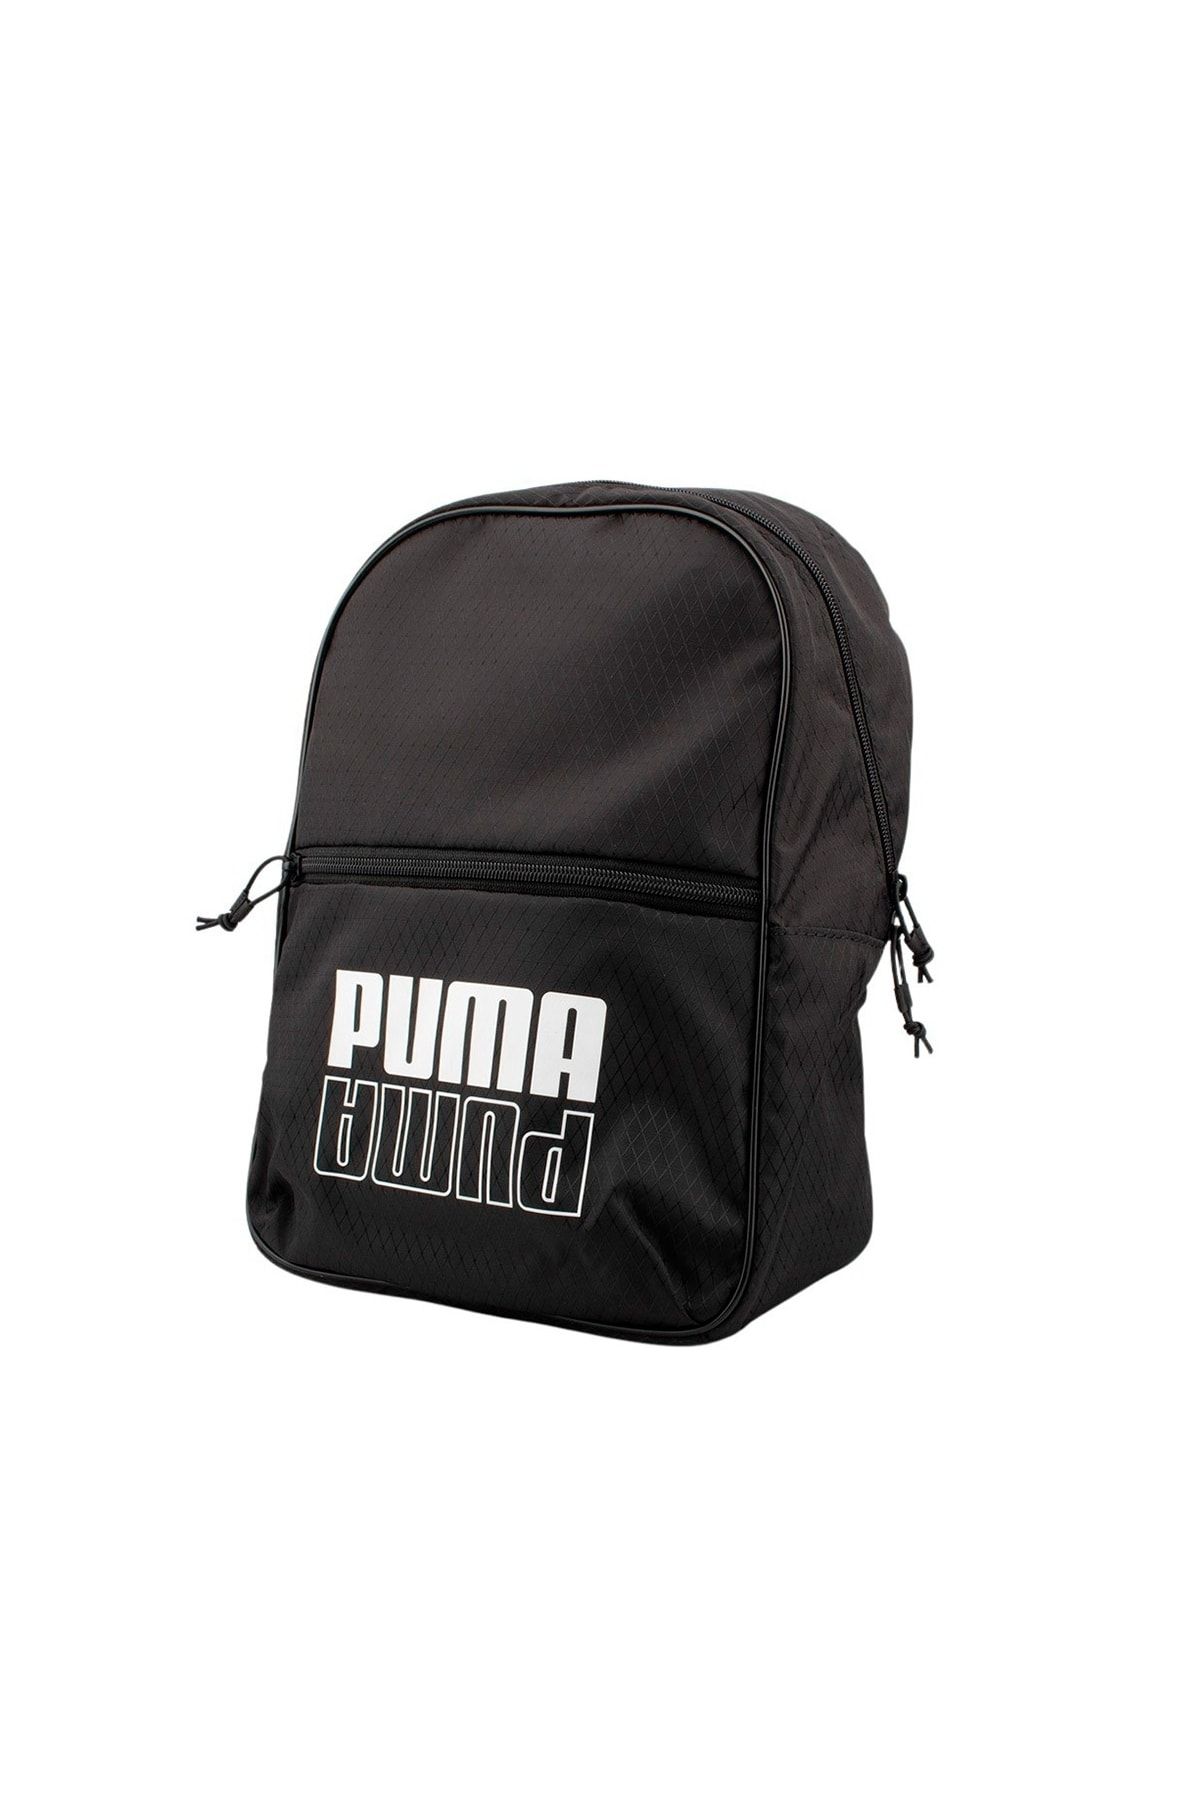 Puma کوله پشتی Mini Boy - پایه اصلی 078323-01 سیاه